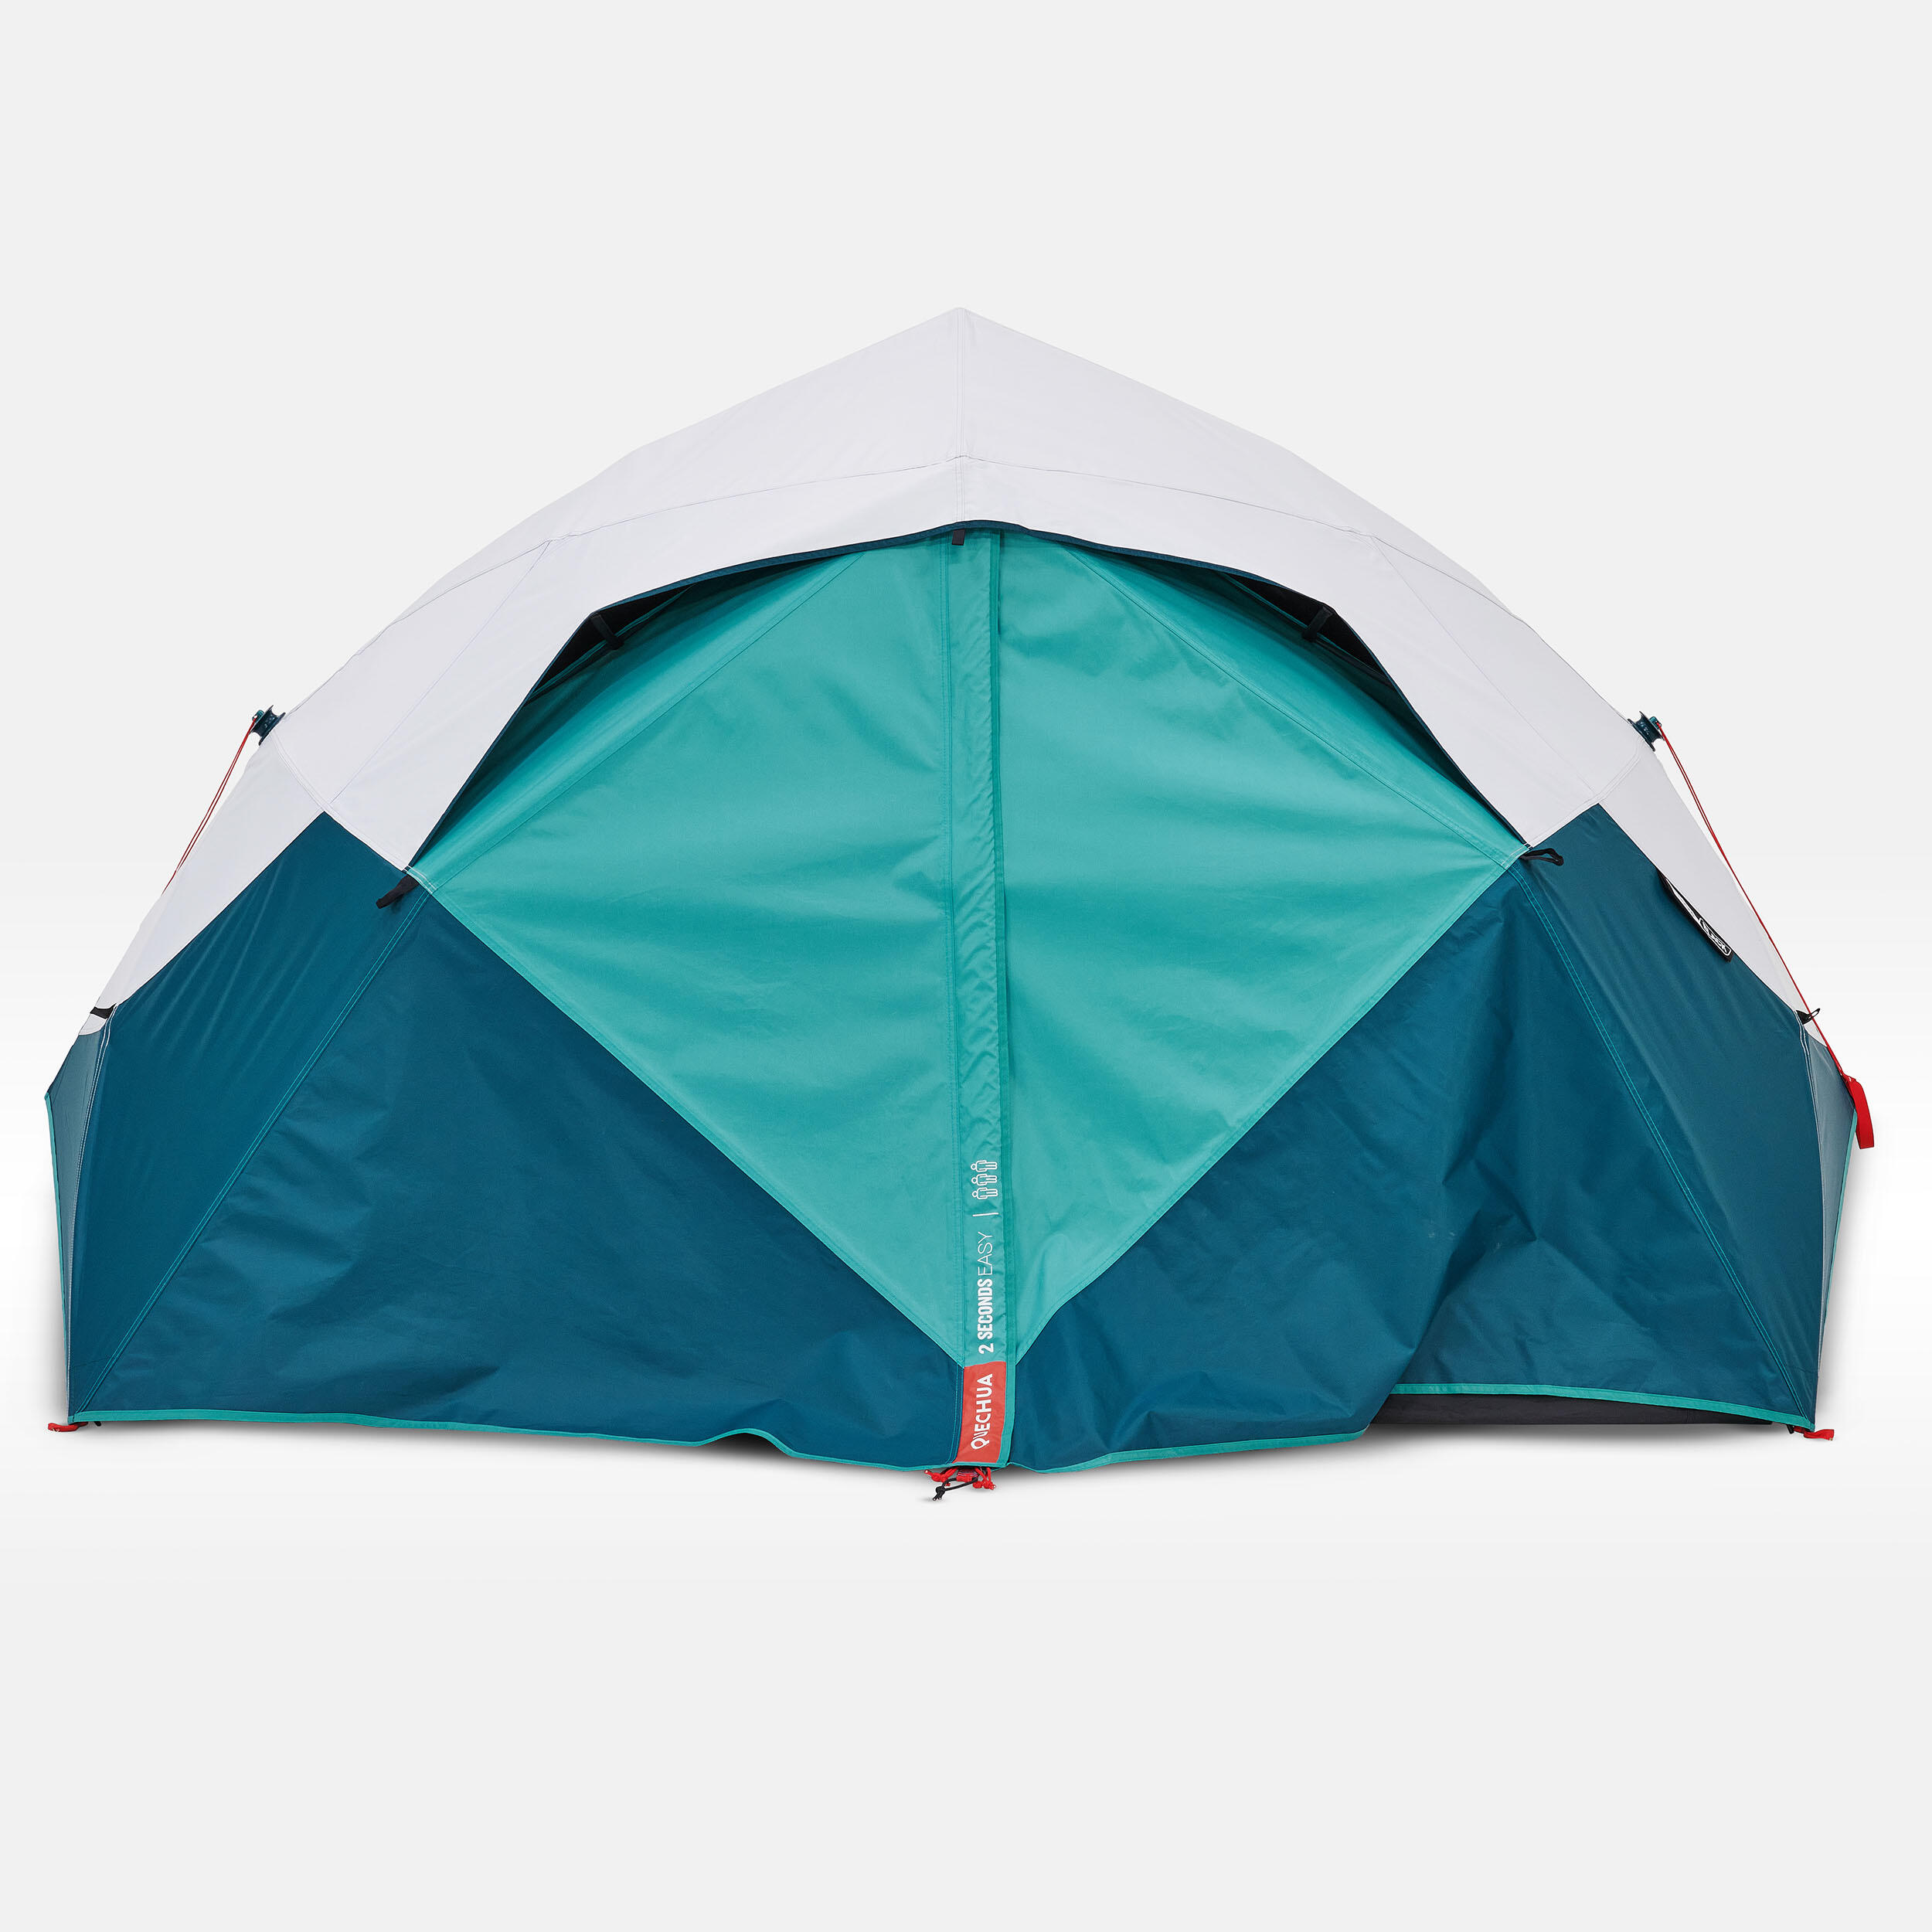 Tente de camping 3 personnes – 2 Seconds Easy Fresh & Black - QUECHUA